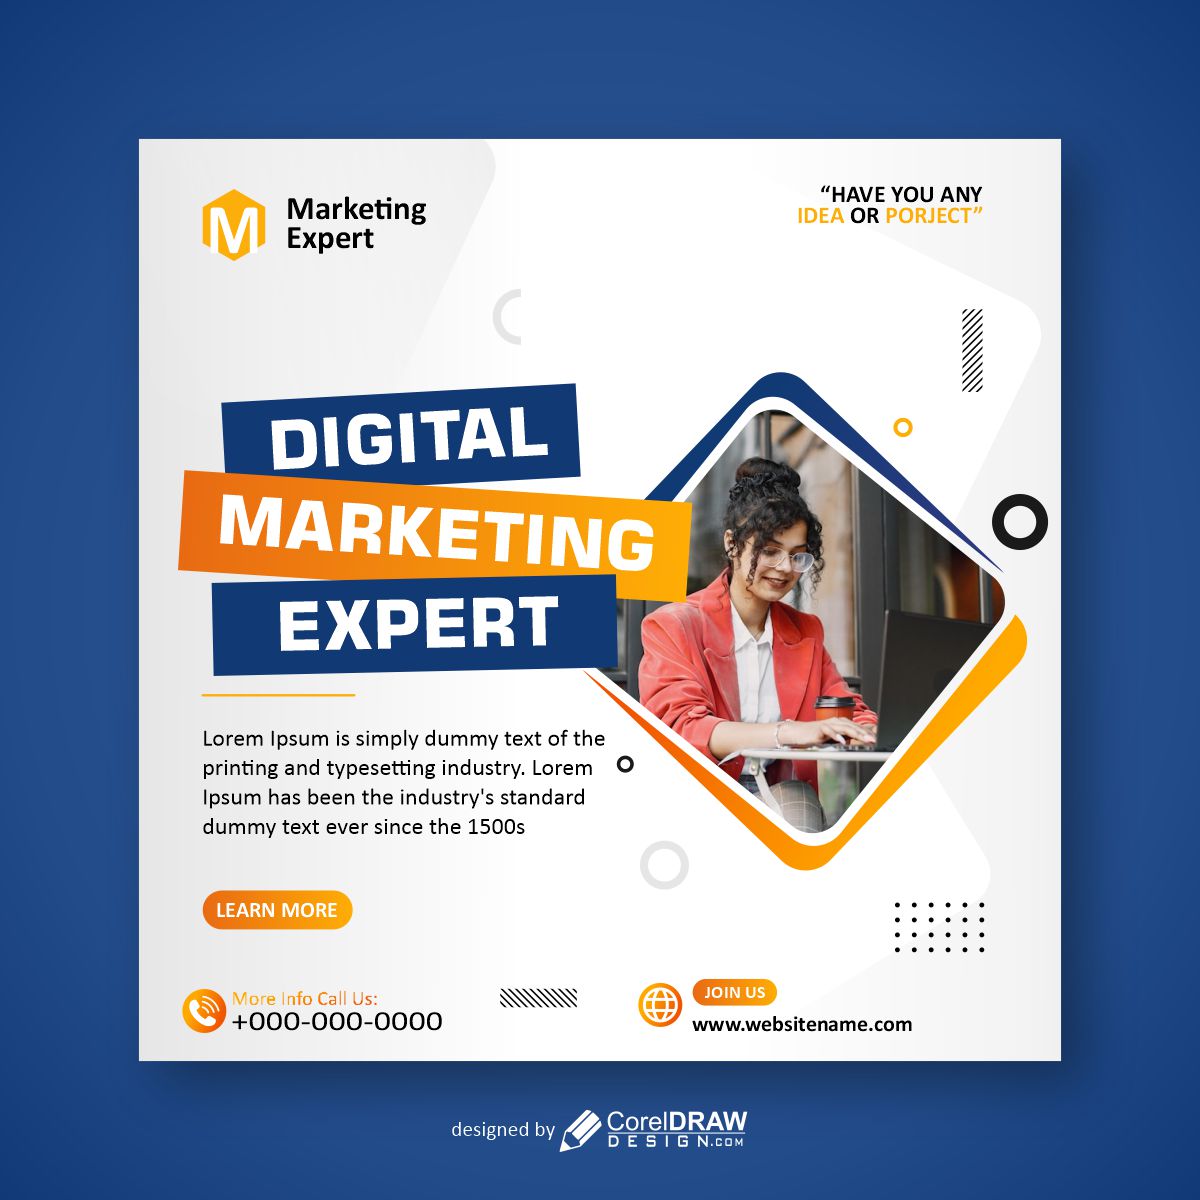 Digital Marketing Expert new poster vector free image